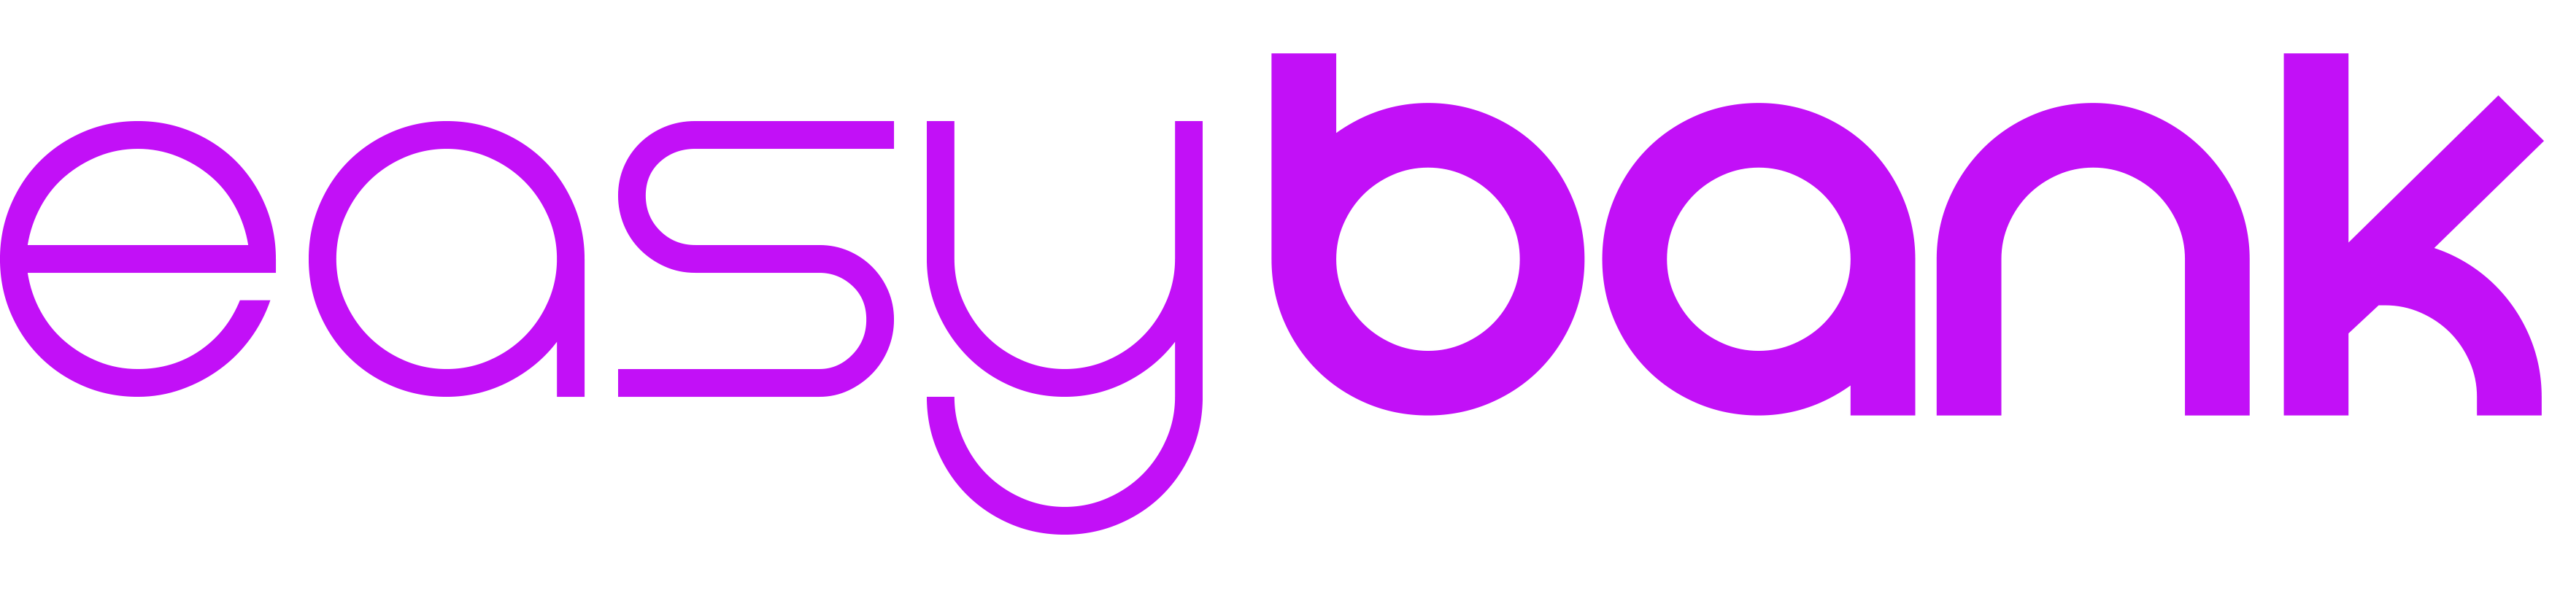 logo easybank